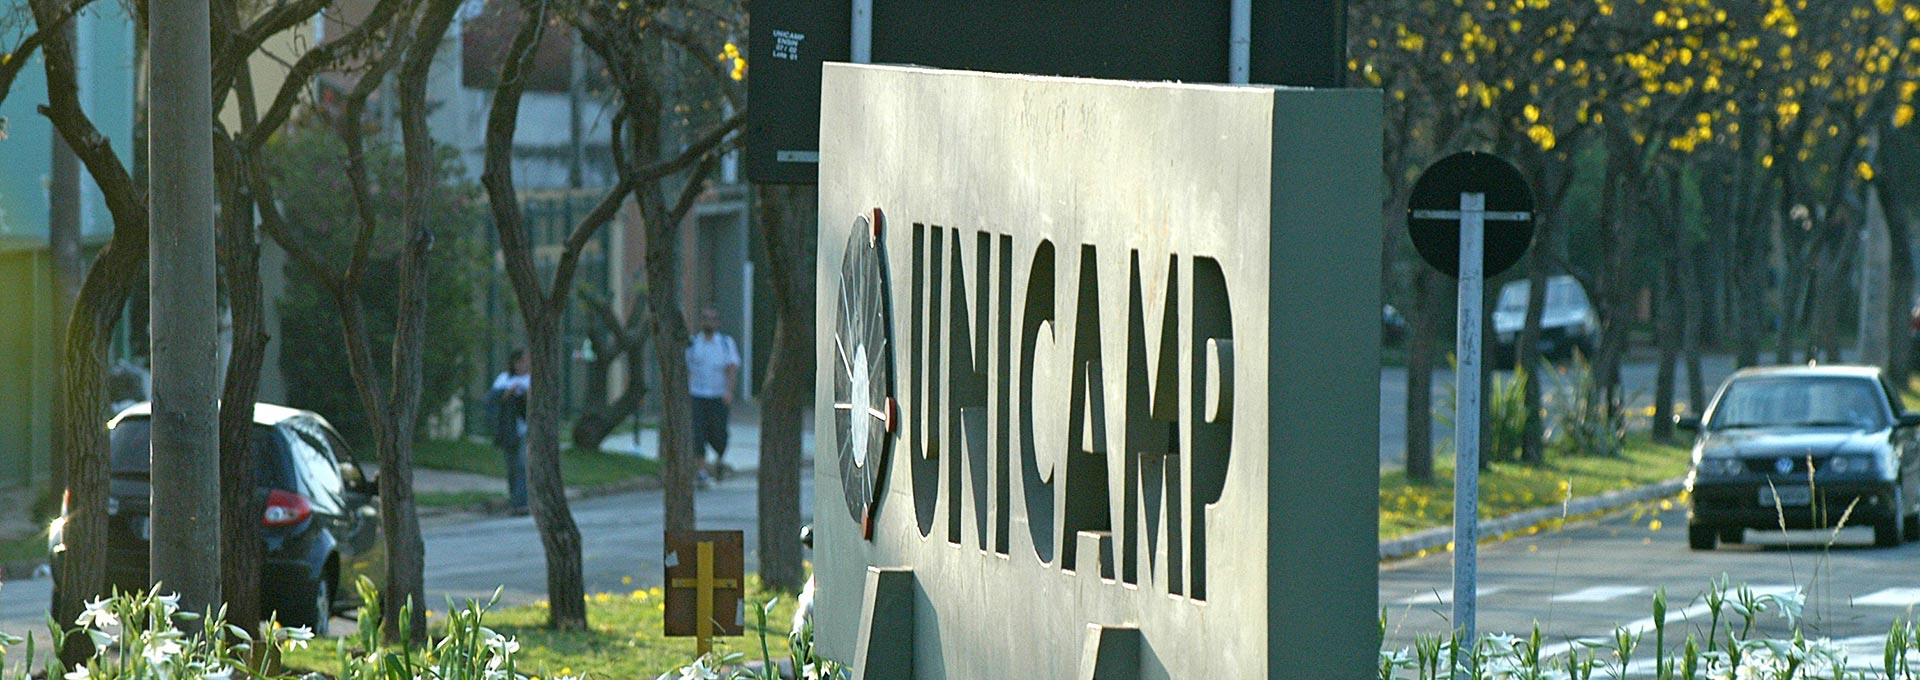 Entrada principal da Unicamp